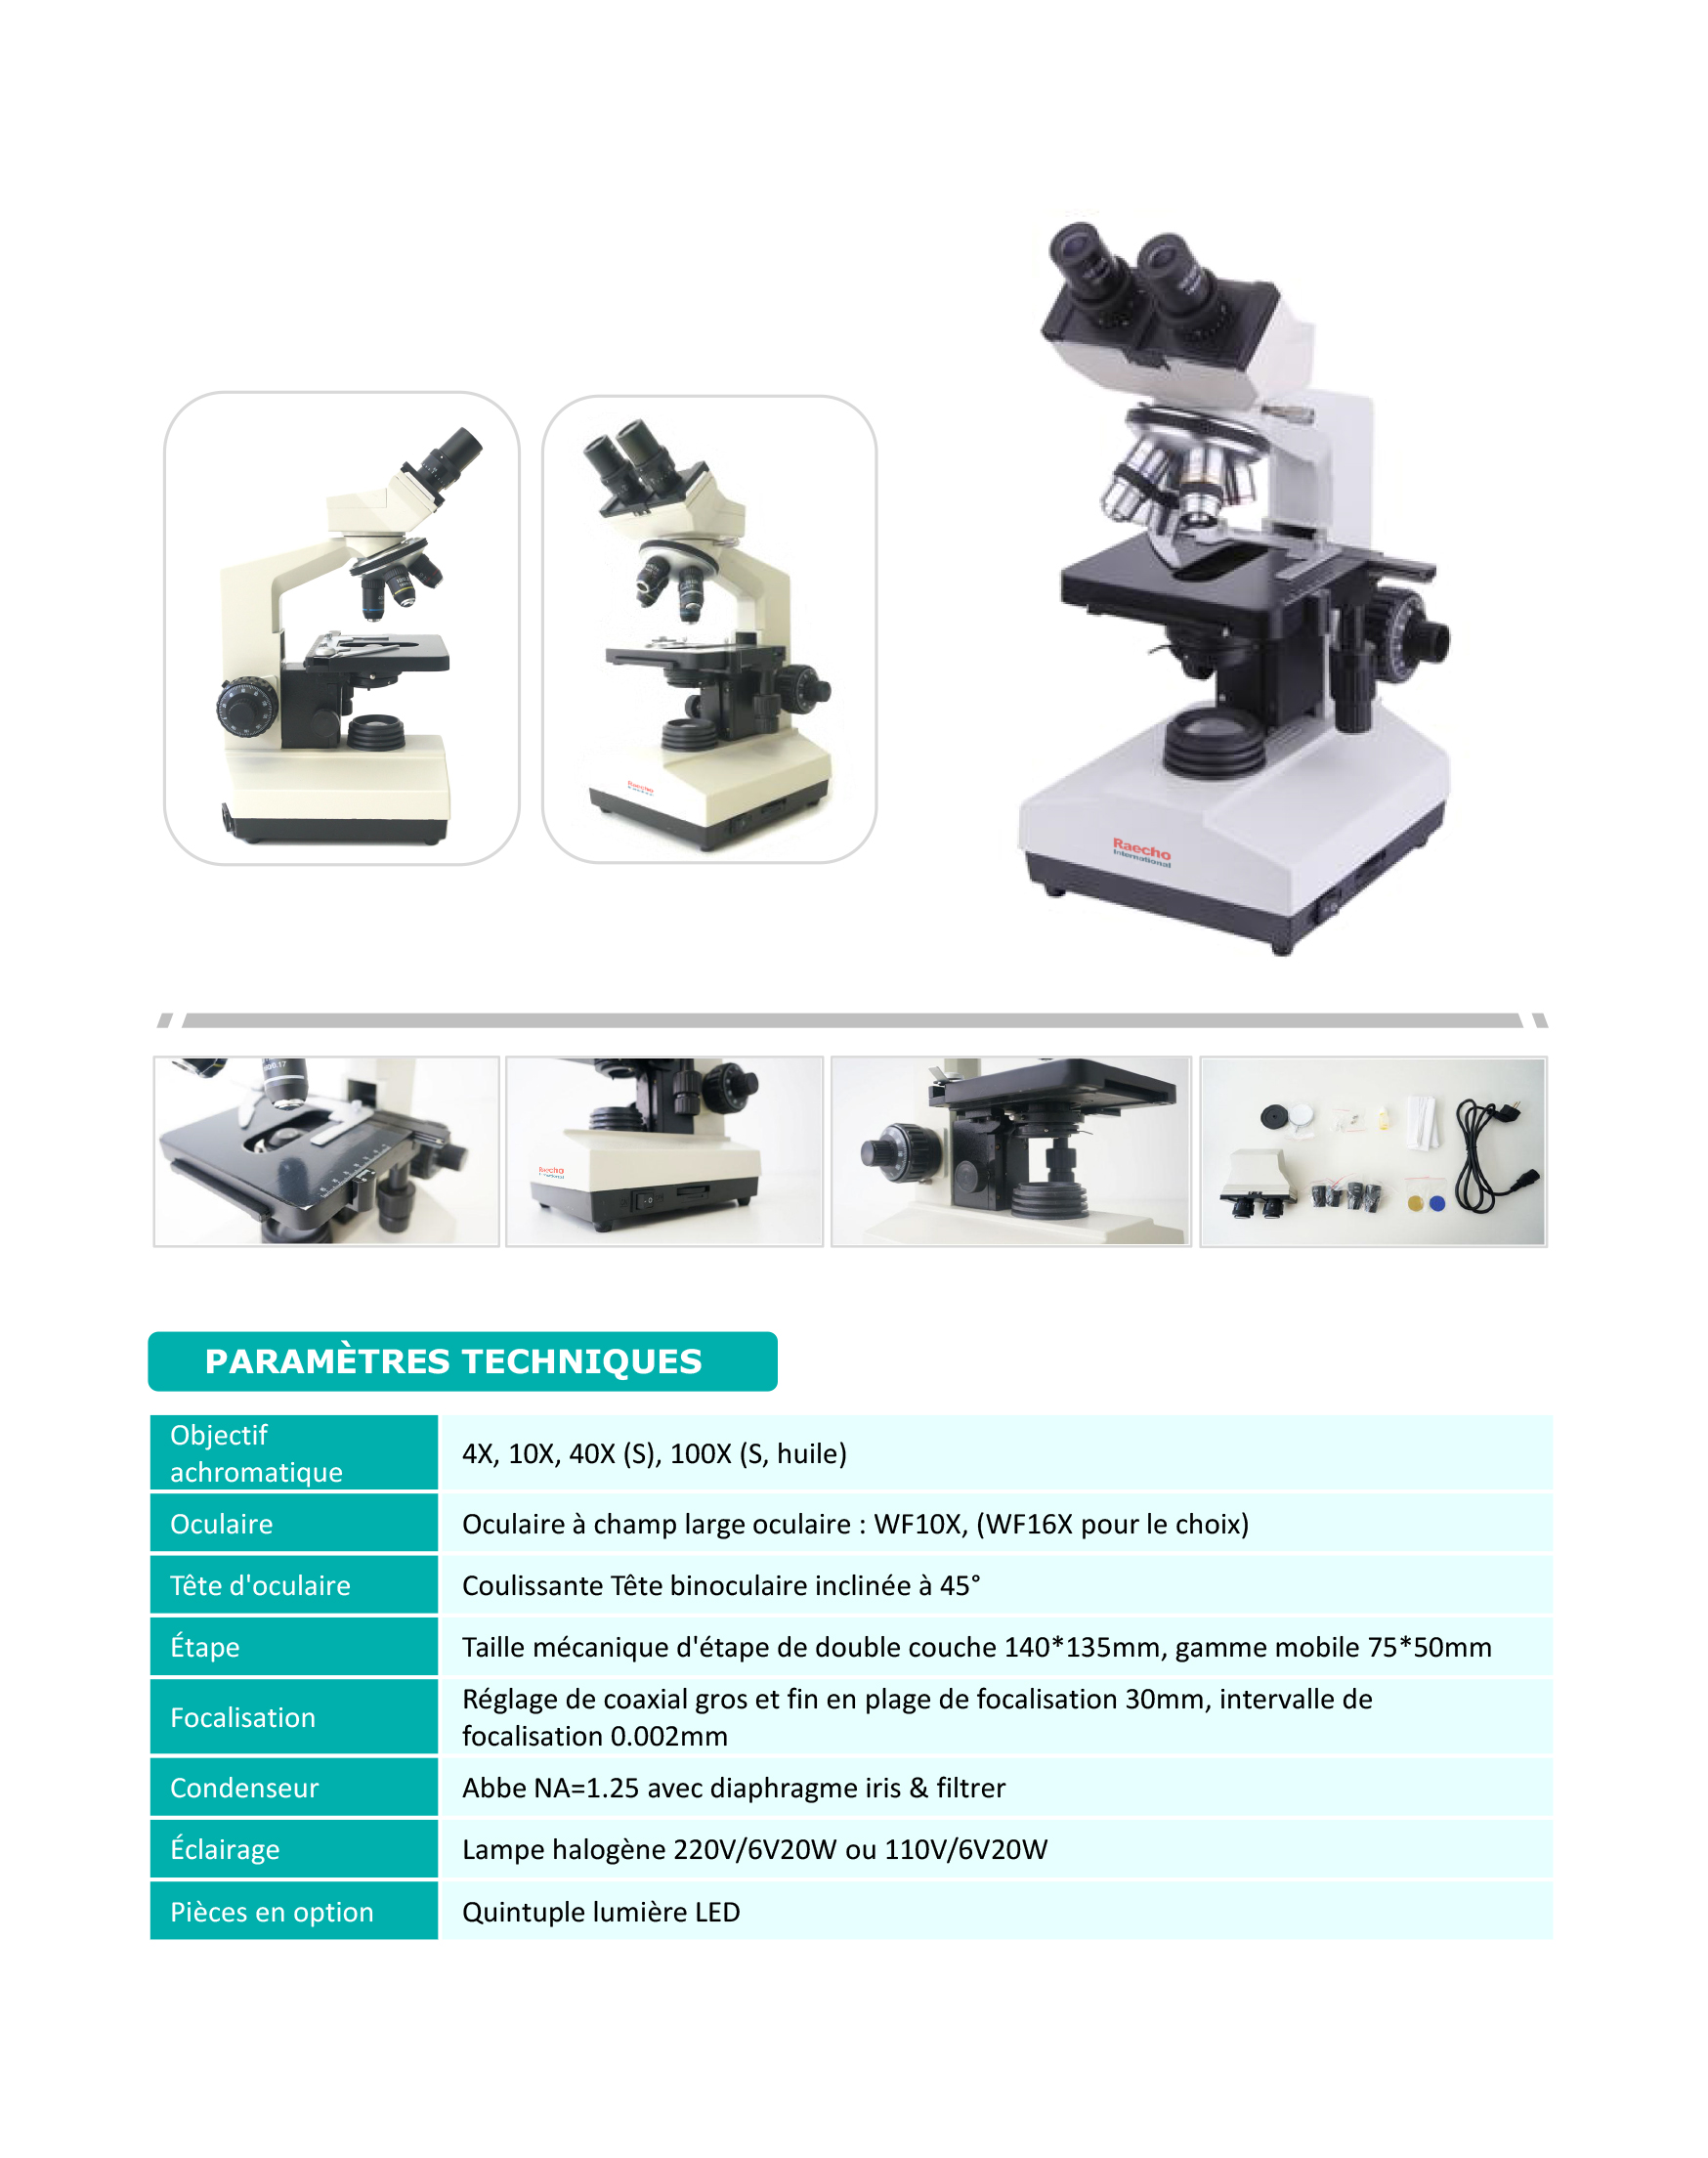 Raecho-Microscope Biologique-1.jpg